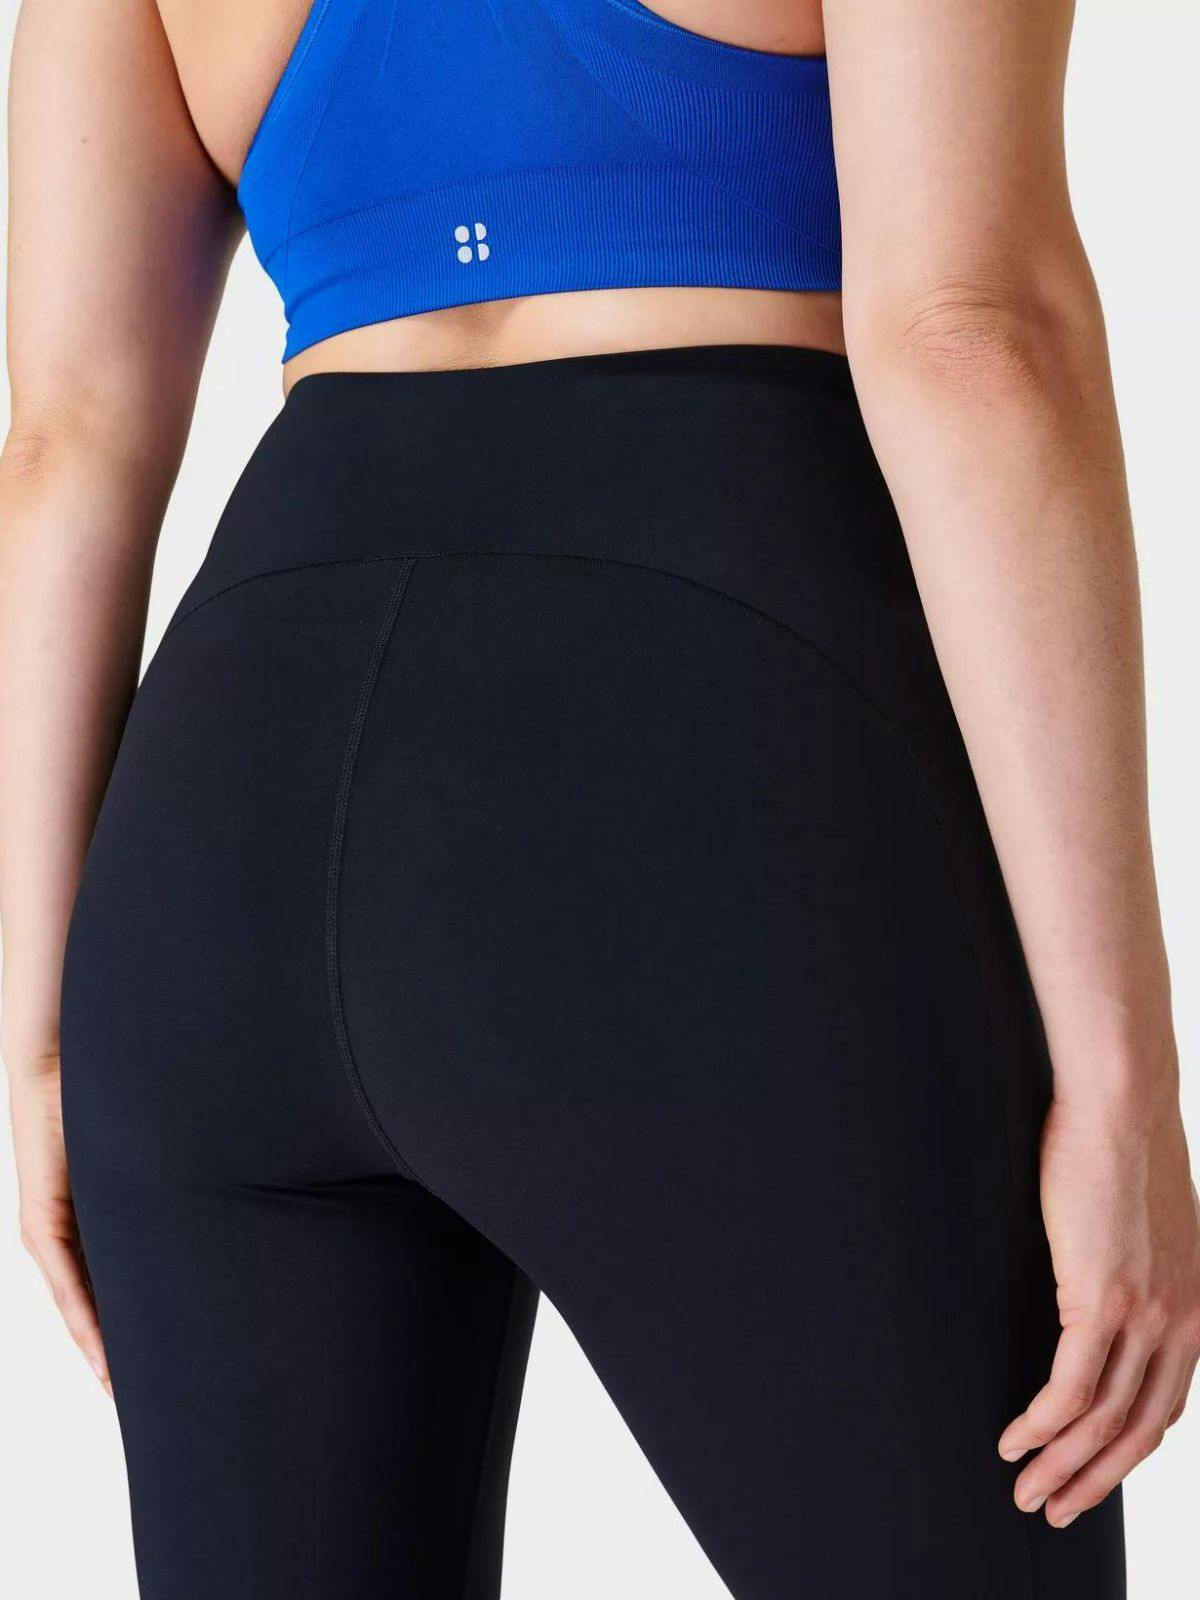 High Waist Yoga Pants Seamless Sports Gym Leggings Scrunch Bum Push Up  Workout | eBay